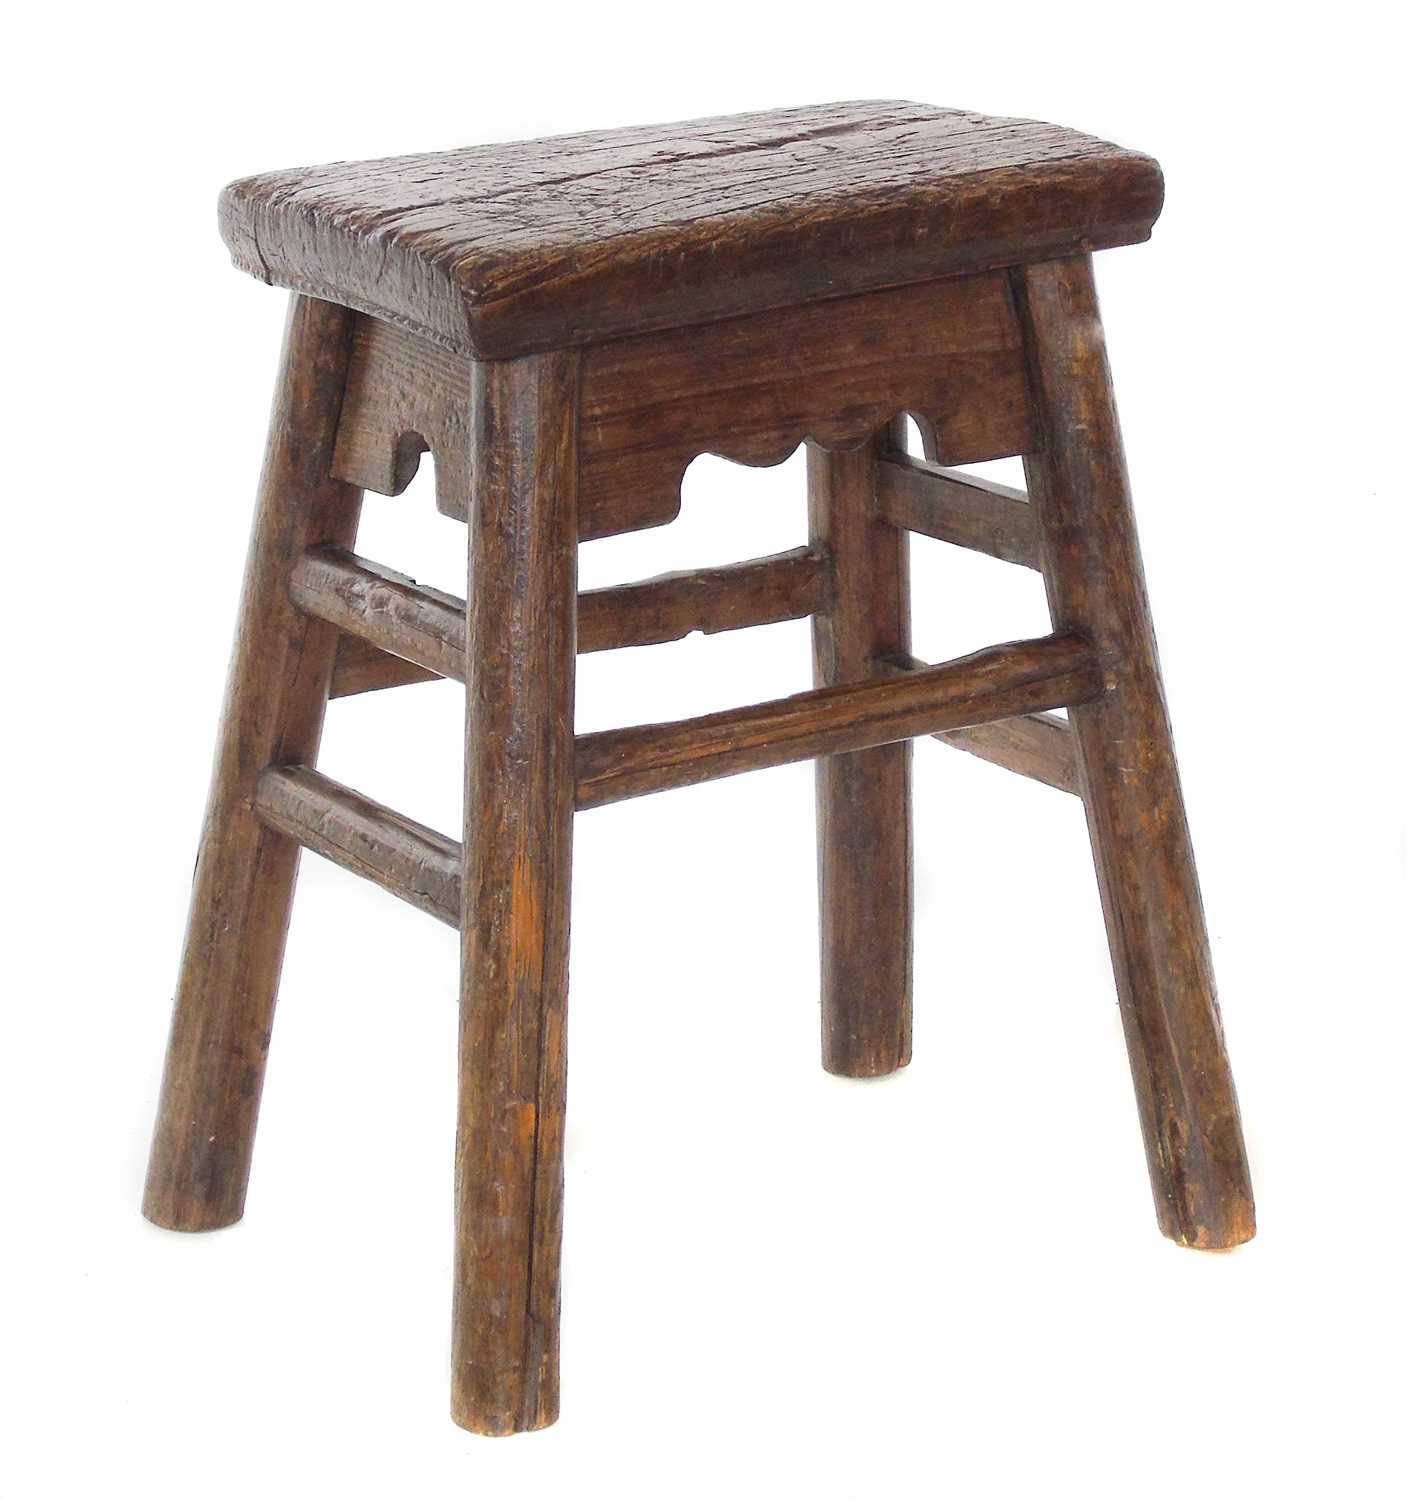 Lot 610 - 19th century Indian pine and hardwood stool